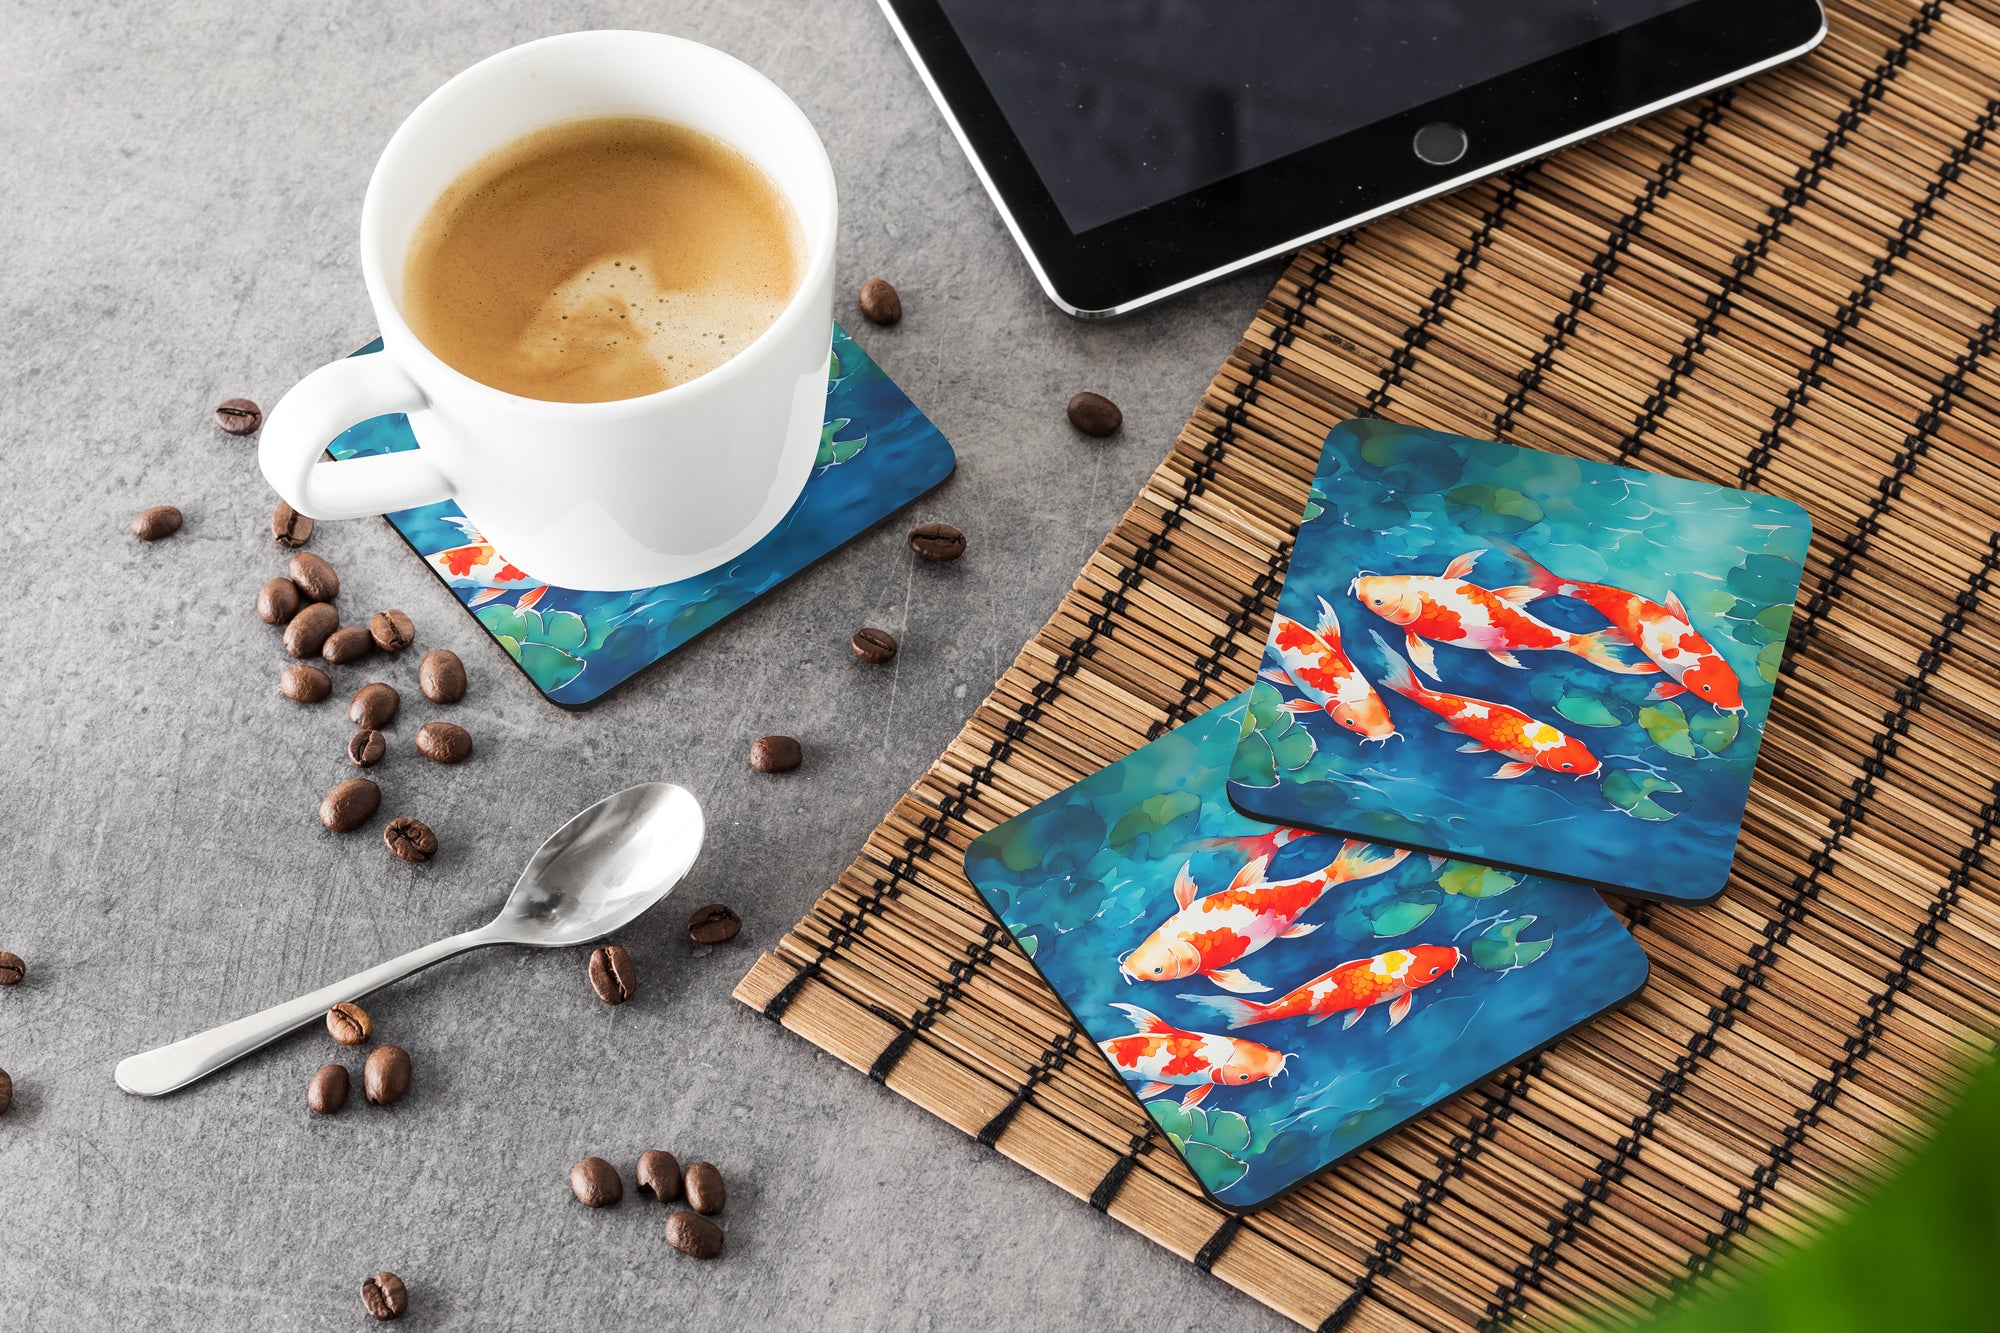 Koi Fish Foam Coasters